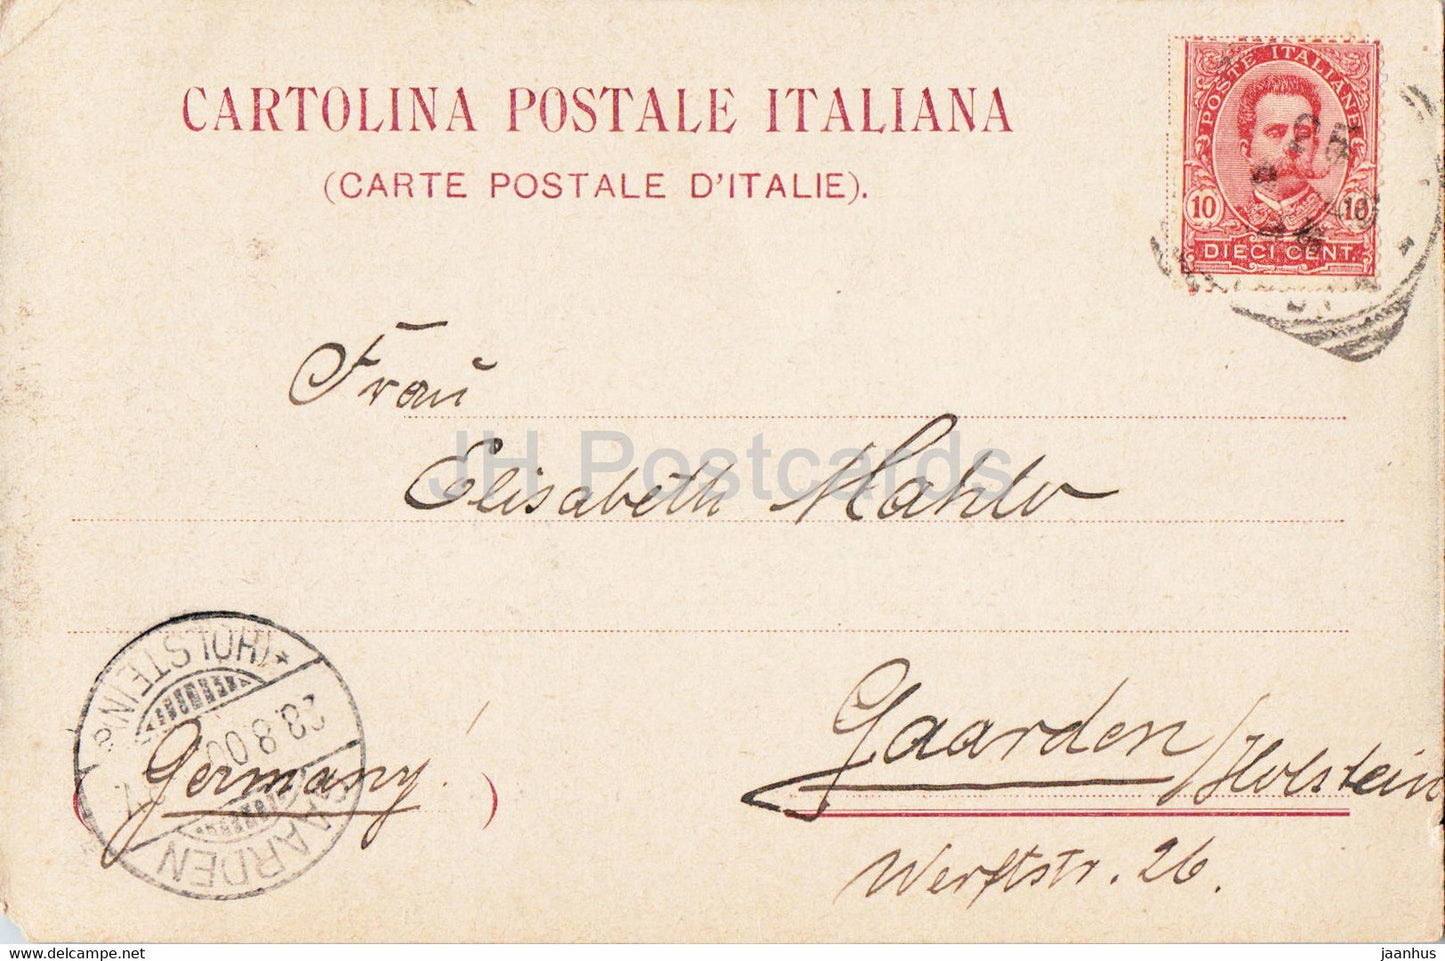 Napoli - Naples - Piazza Municipio e Monumento Vittorio Emanuele - monument - 349 - old postcard - 1900 - Italy - used